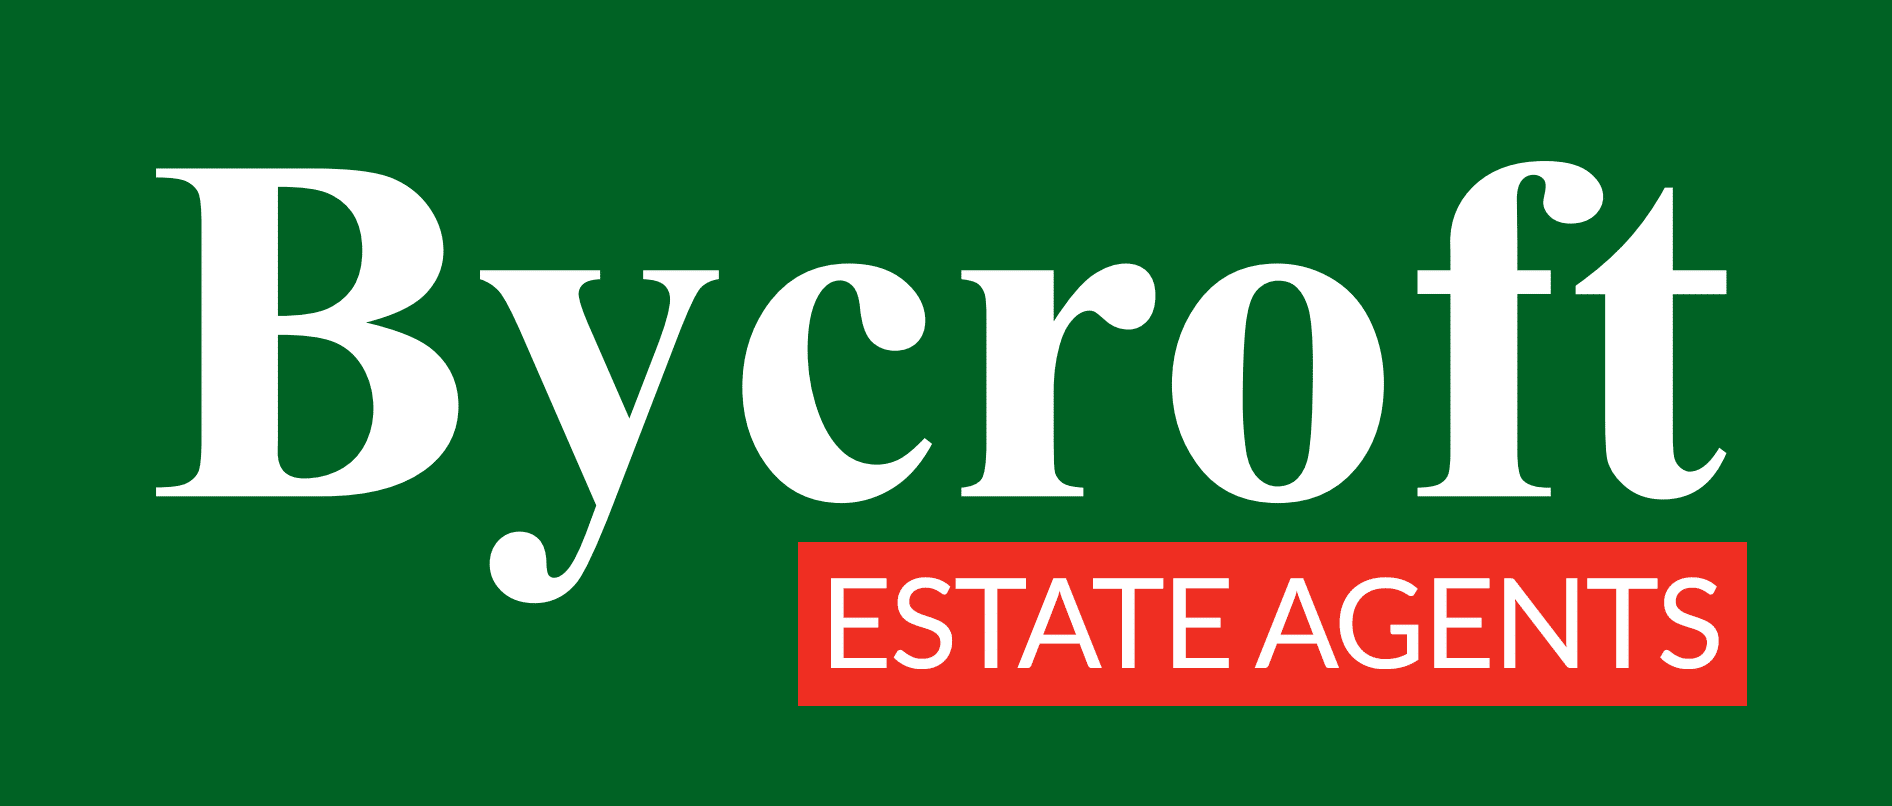 Bycroft Estate Agents